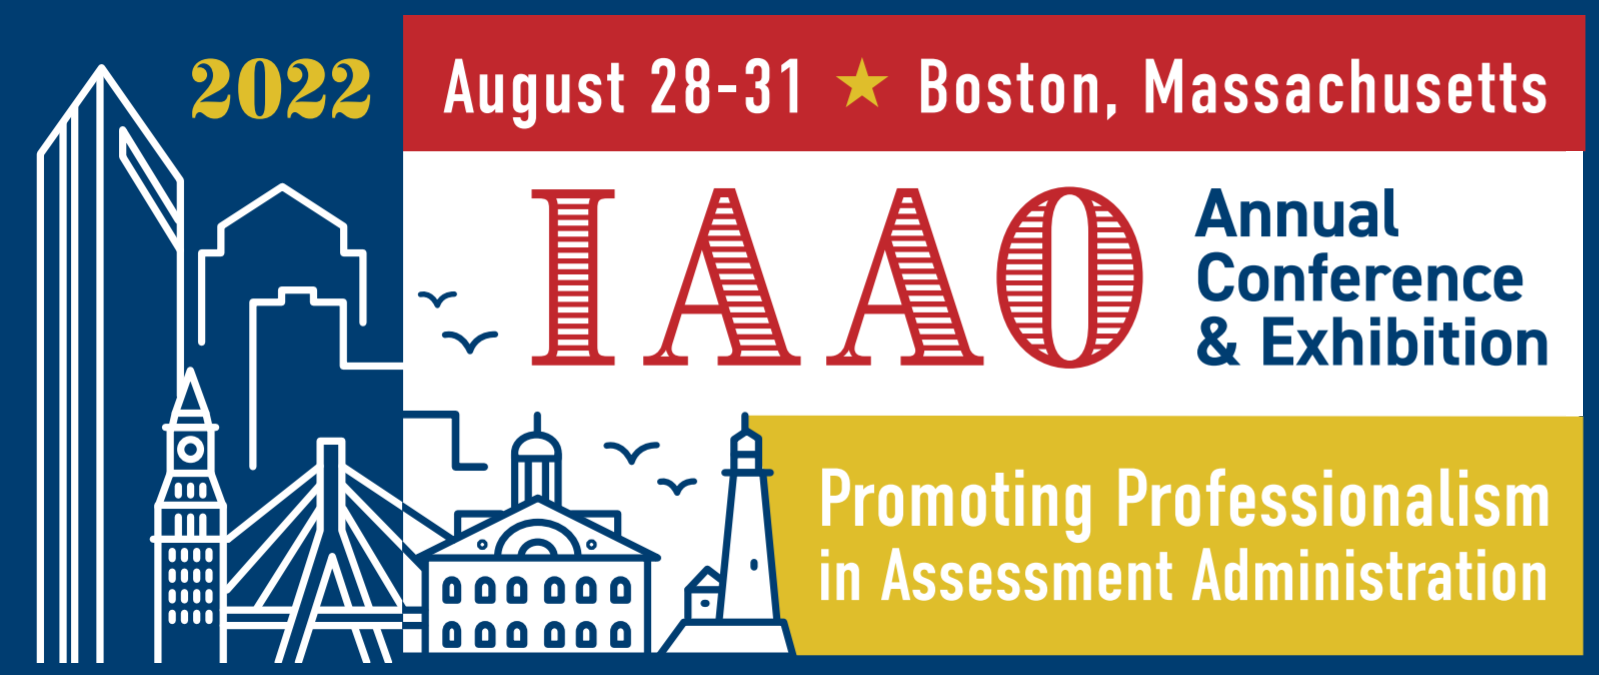 IAAO Annual Conference Showcase 2022